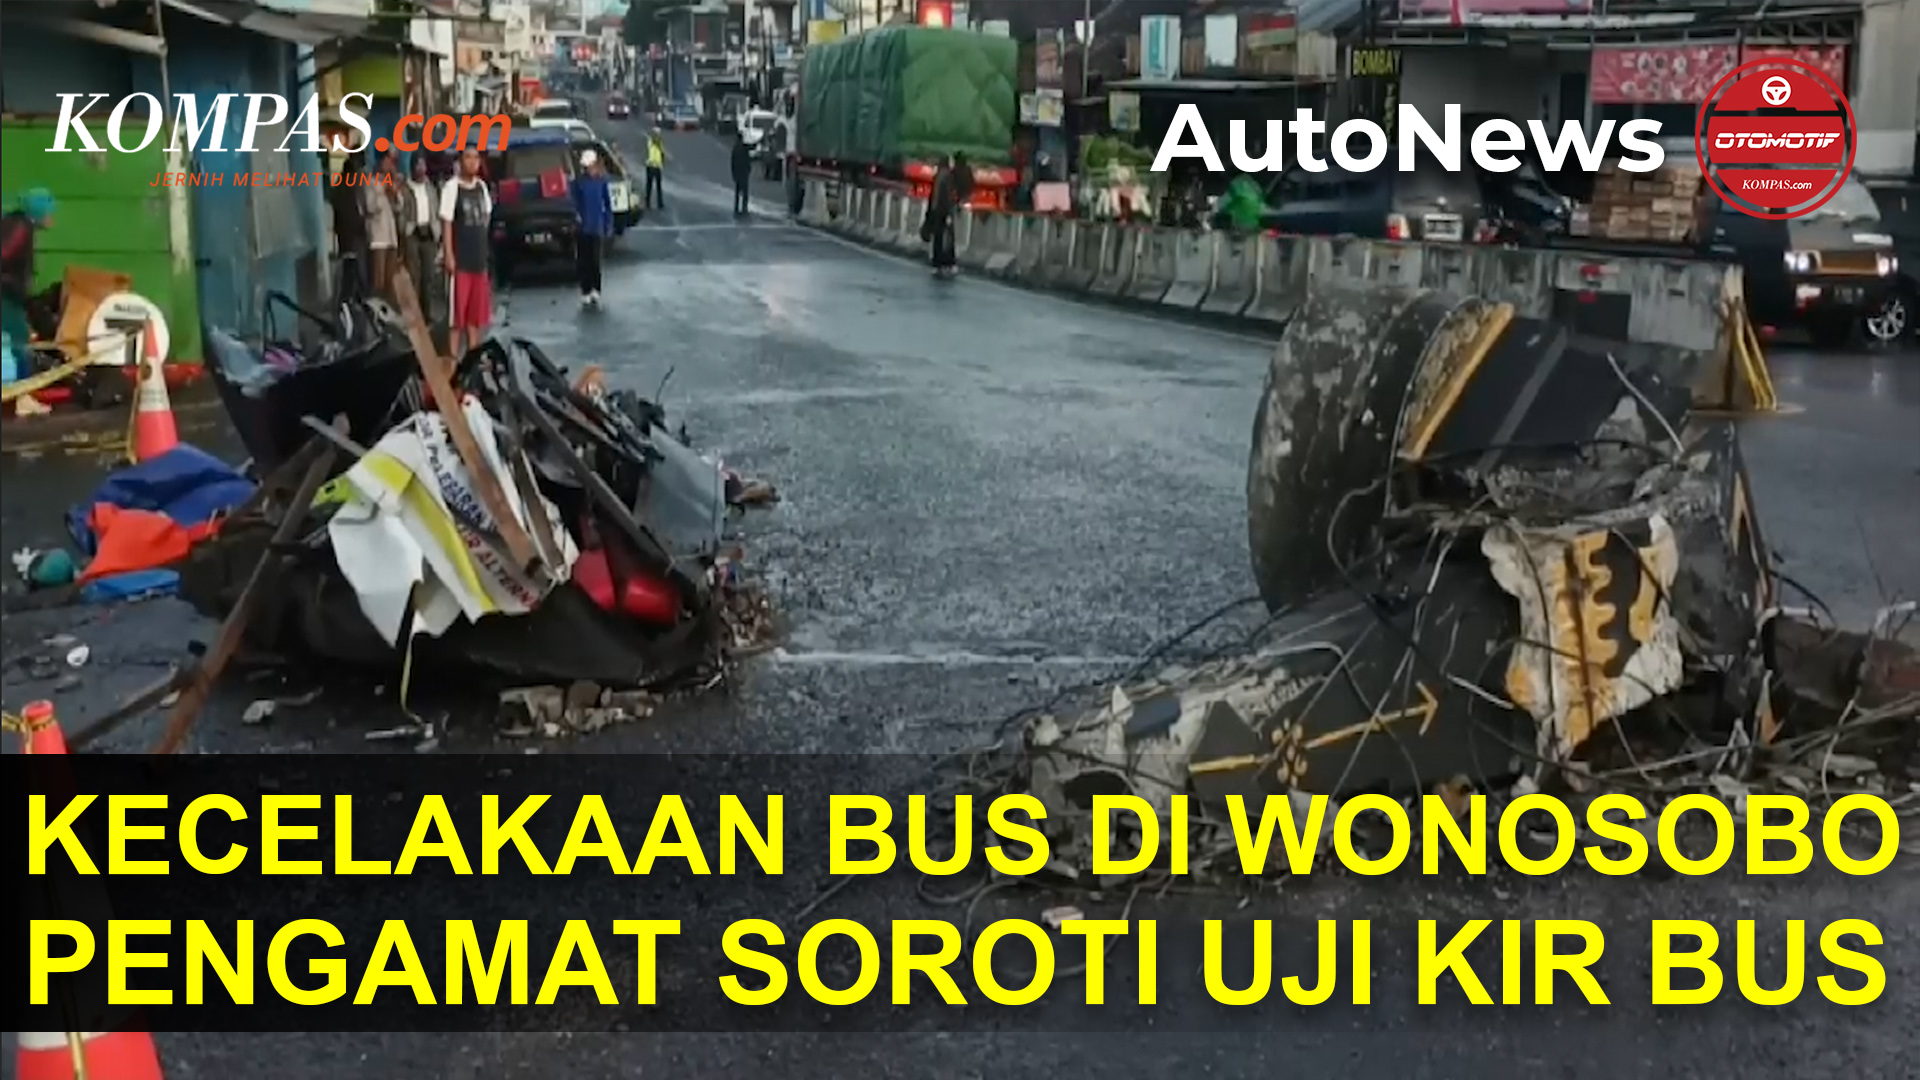 Kecelakaan Bus di Wonosobo, Pengamat Soroti Uji KIR yang Sudah Habis Masa Berlakunya